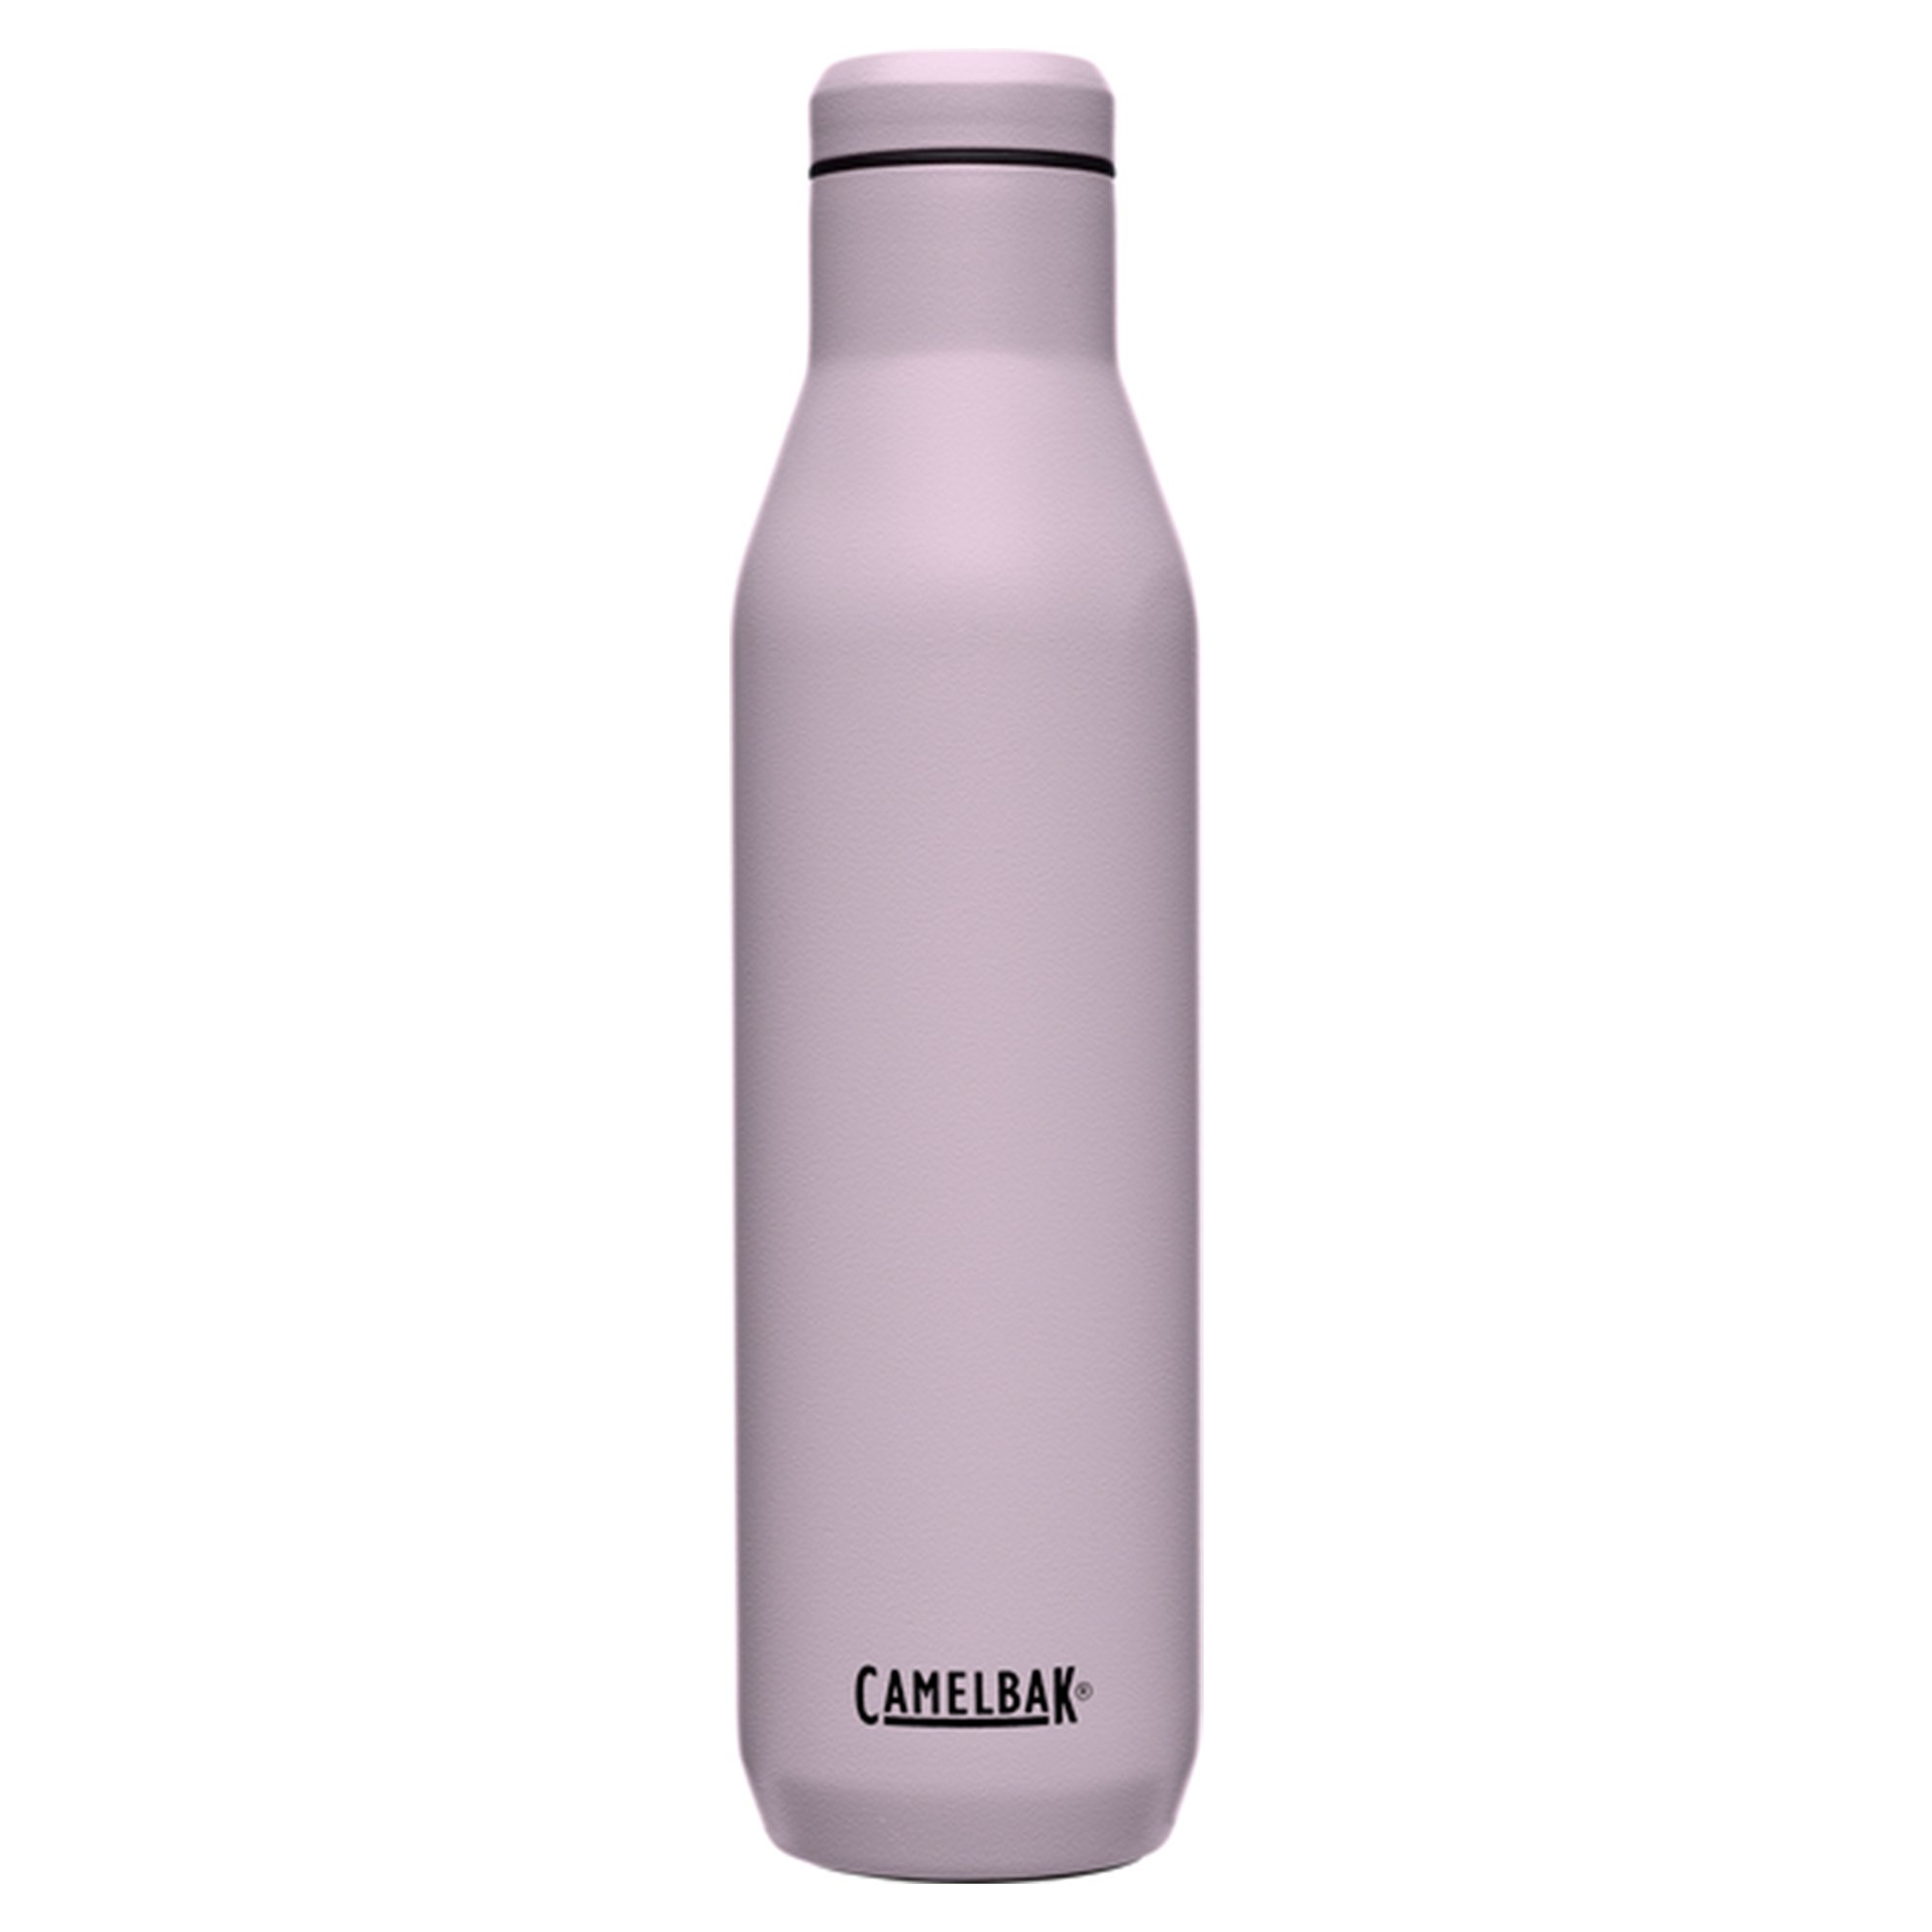 Camelbak Drikkeflaske 0,75 liter purple sky